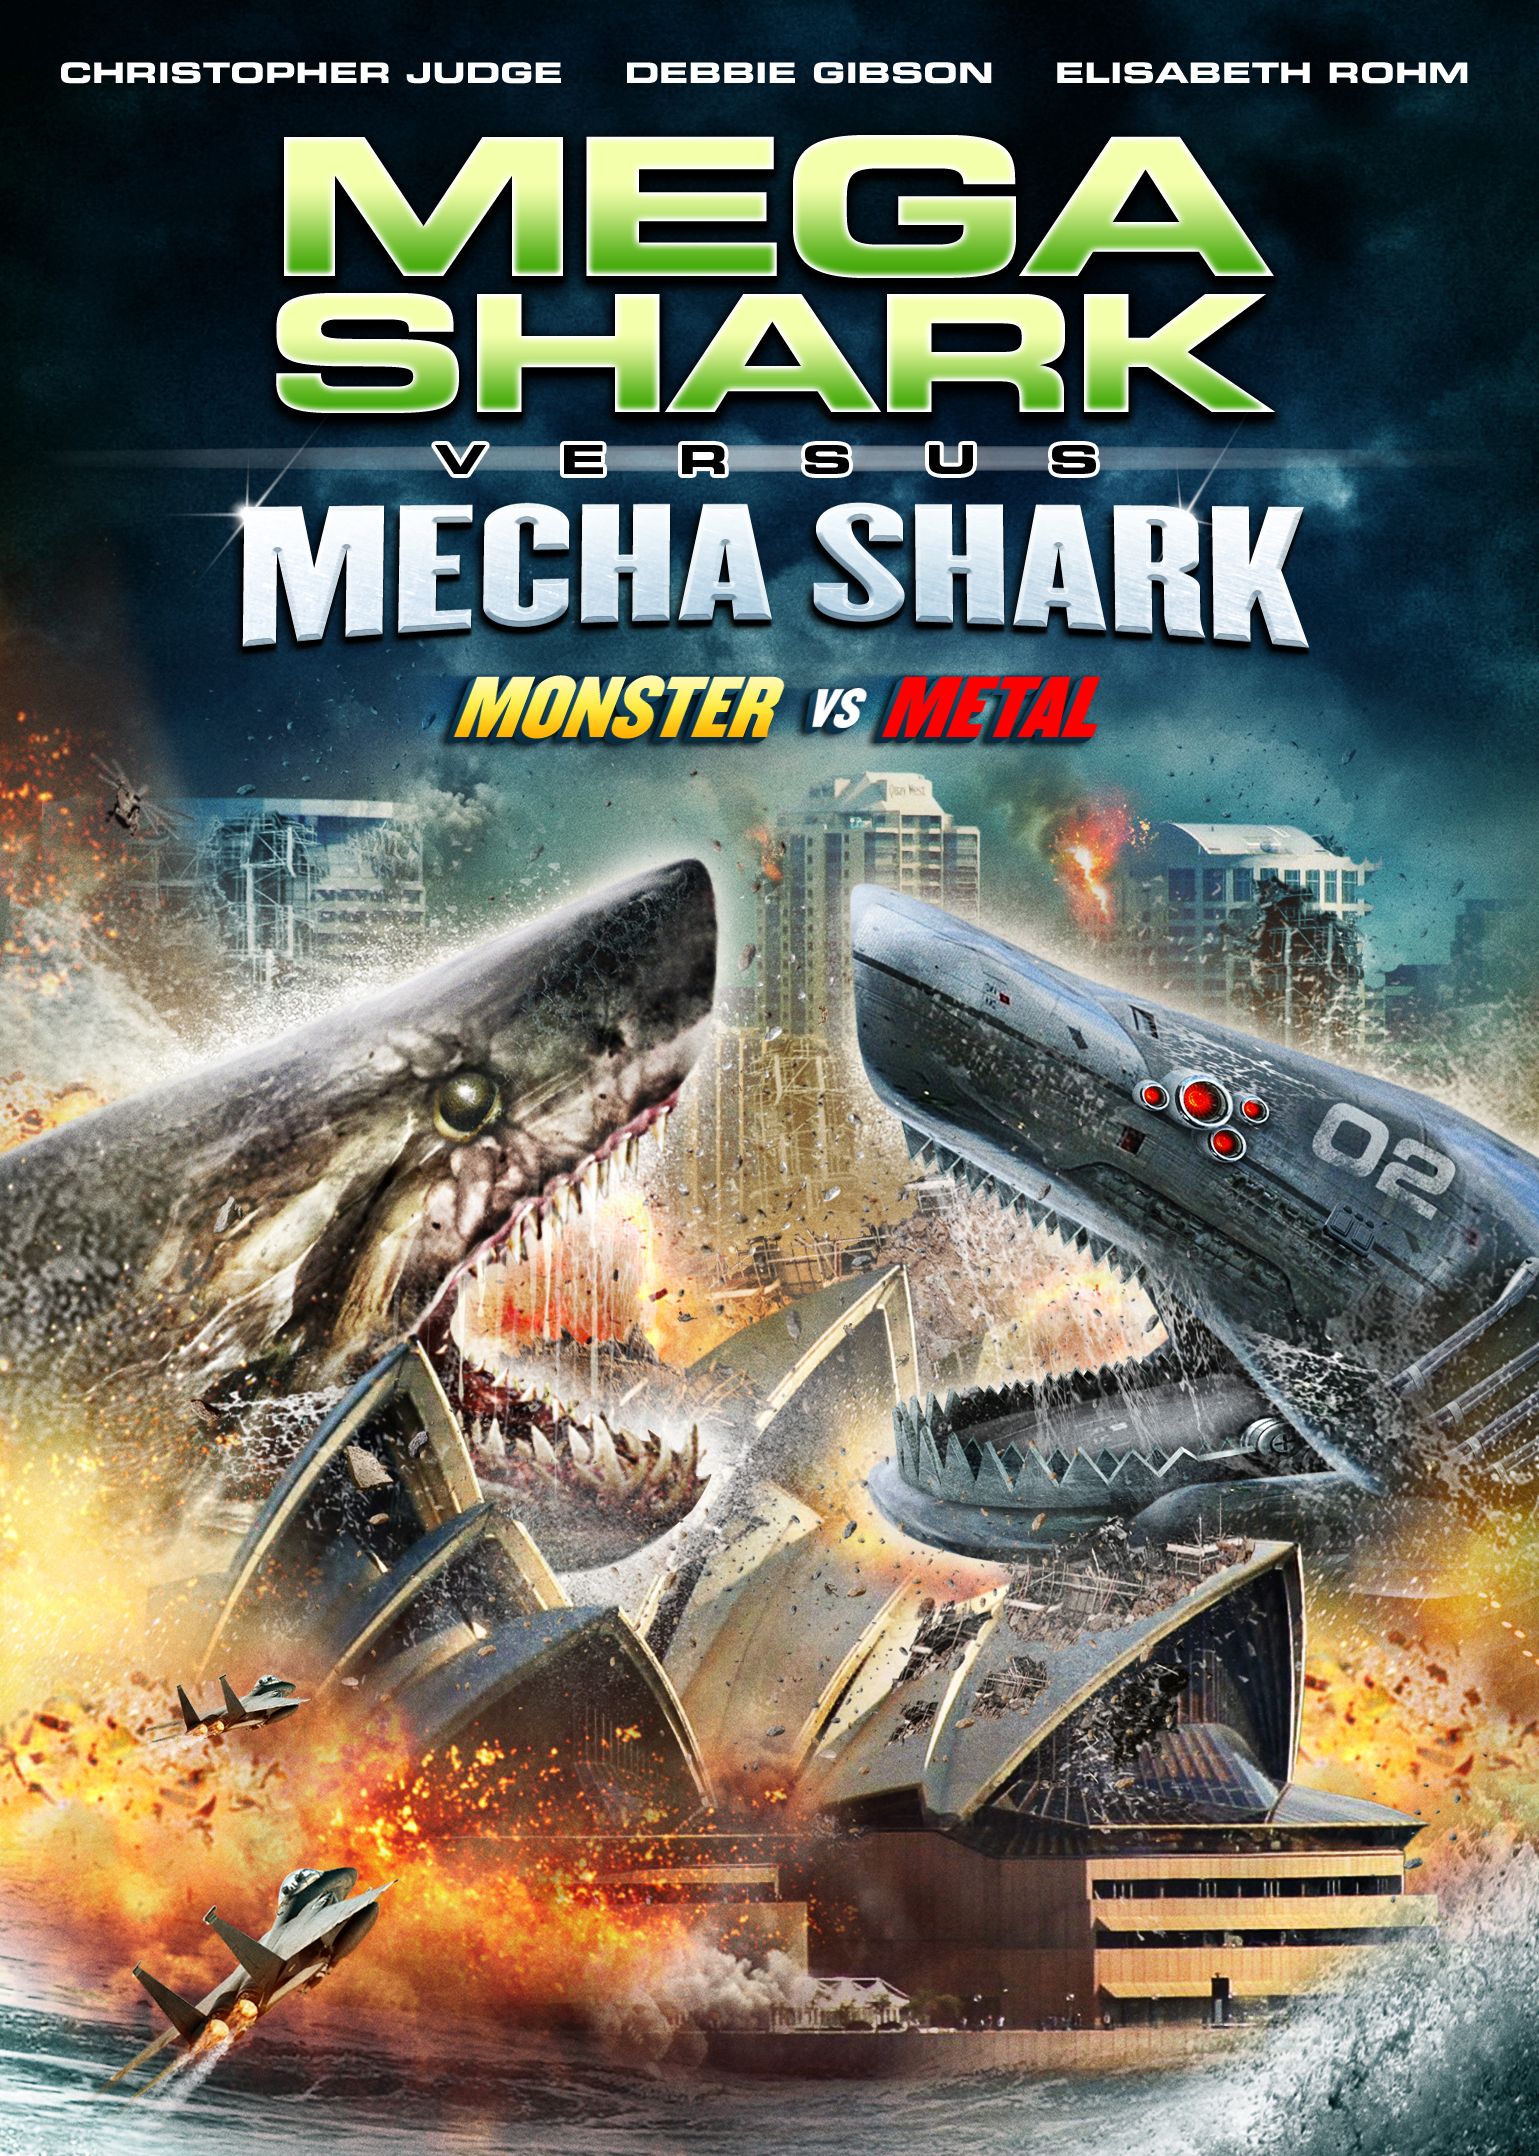 Mega Shark vs Mecha Shark (2014) Hindi Dubbed Movie